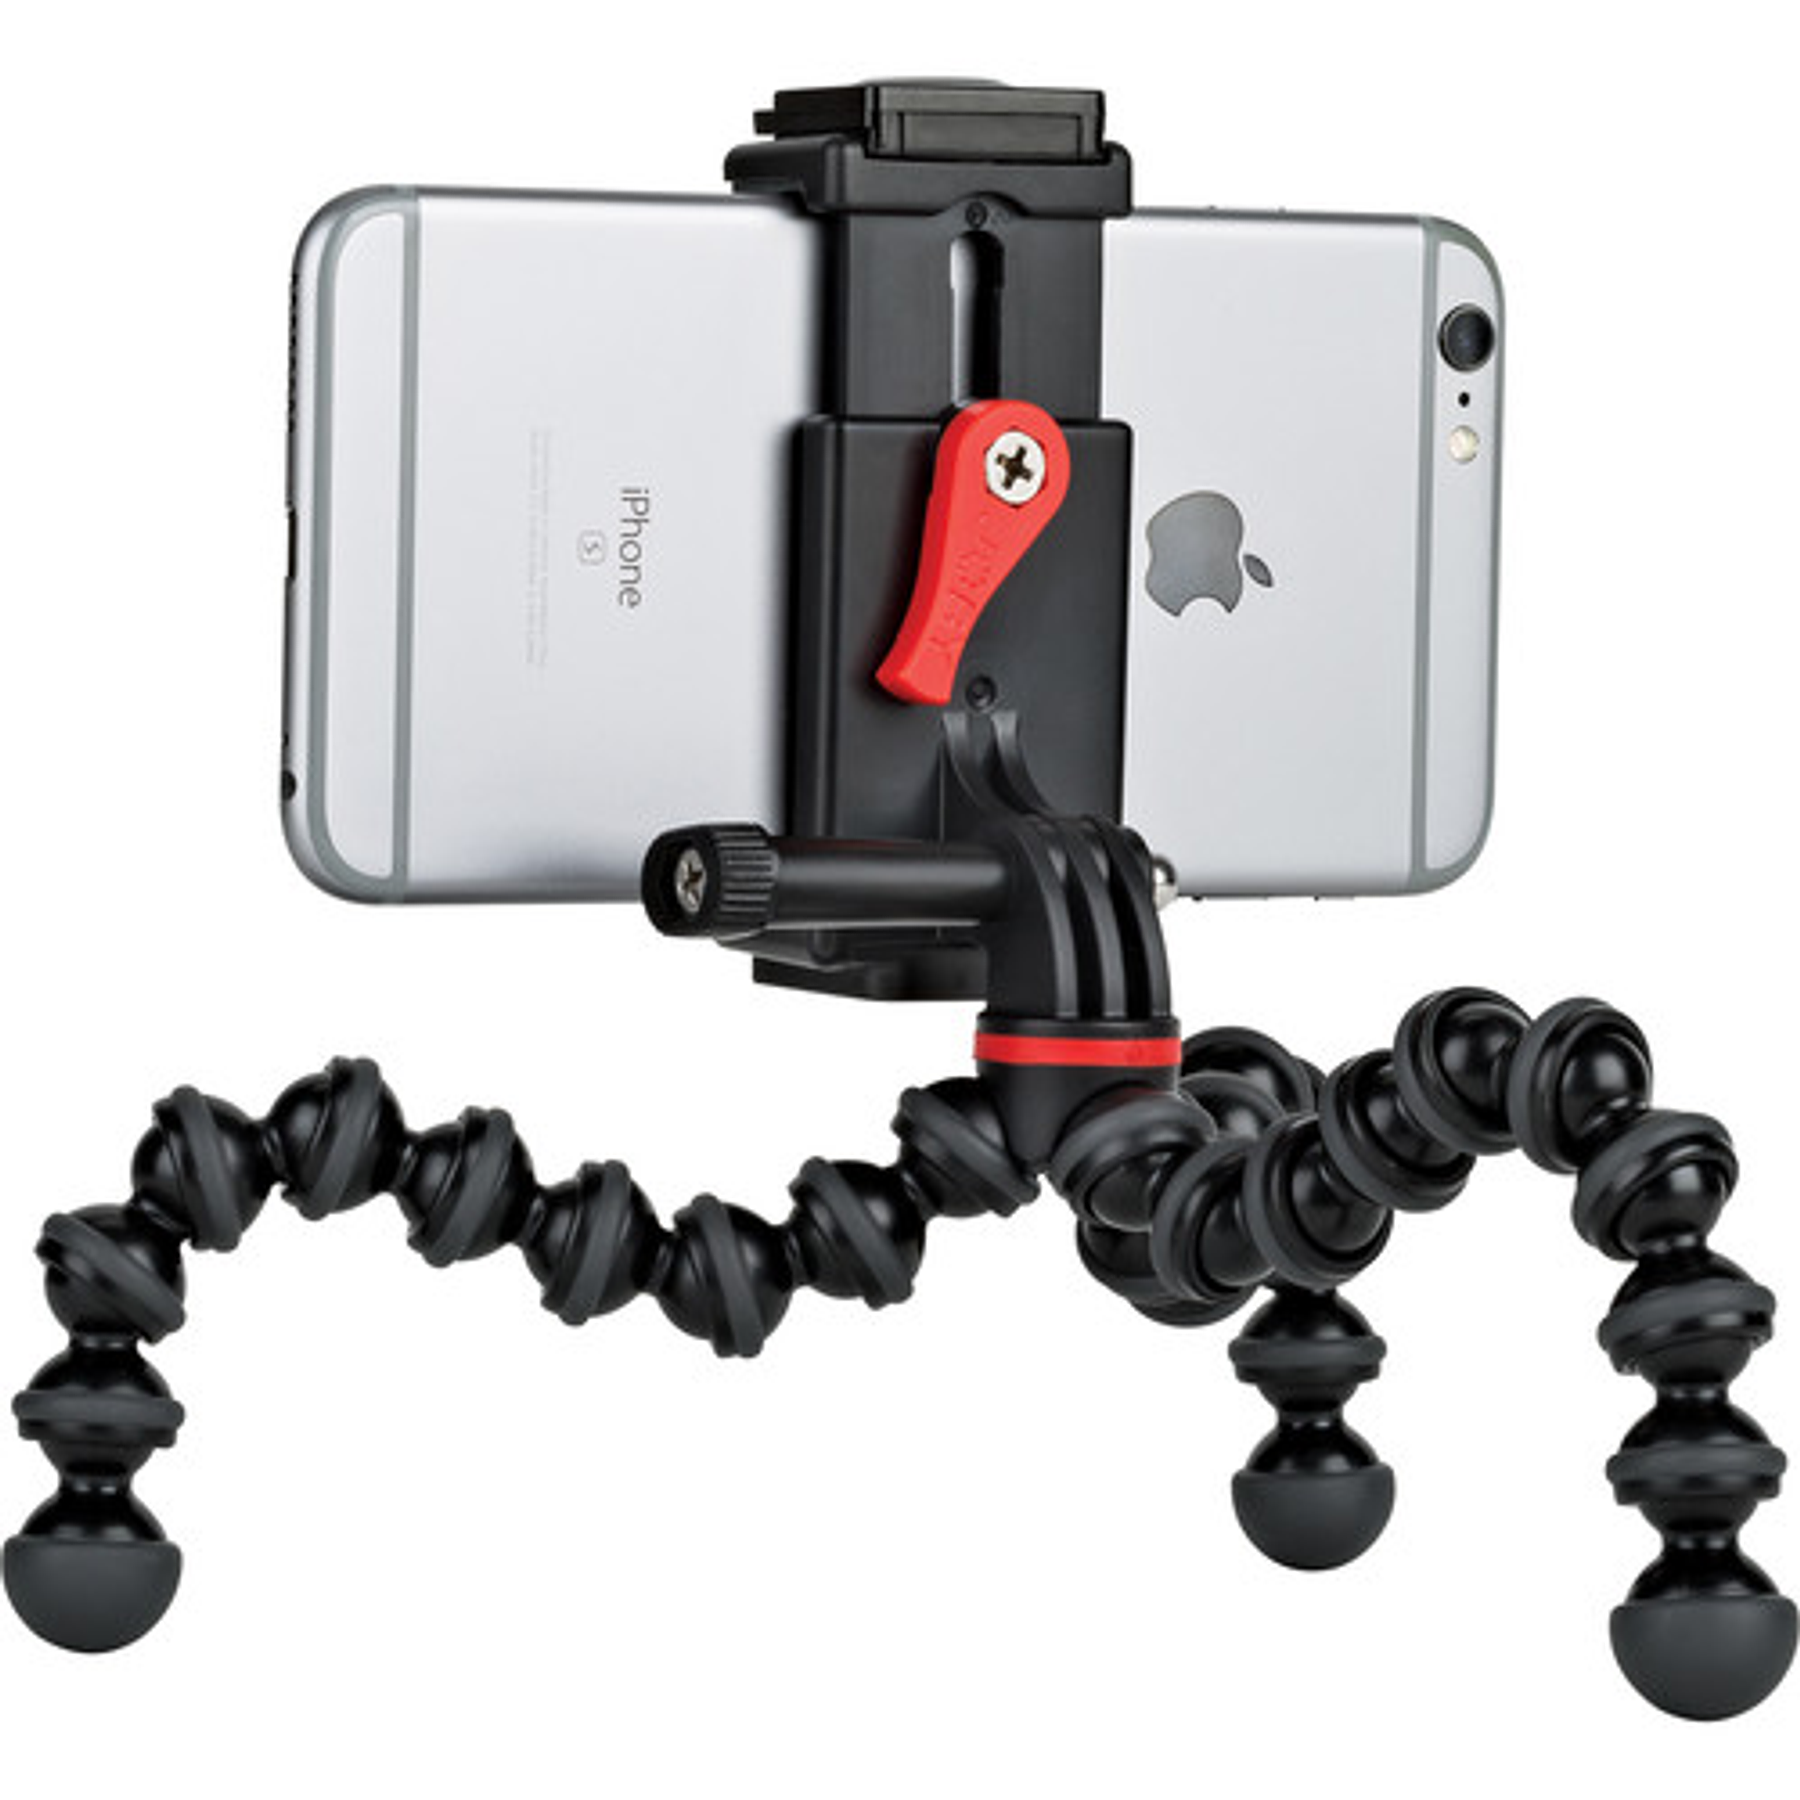 JOBY GripTight GorillaPod Action Stand con montura para Smartphones Kit